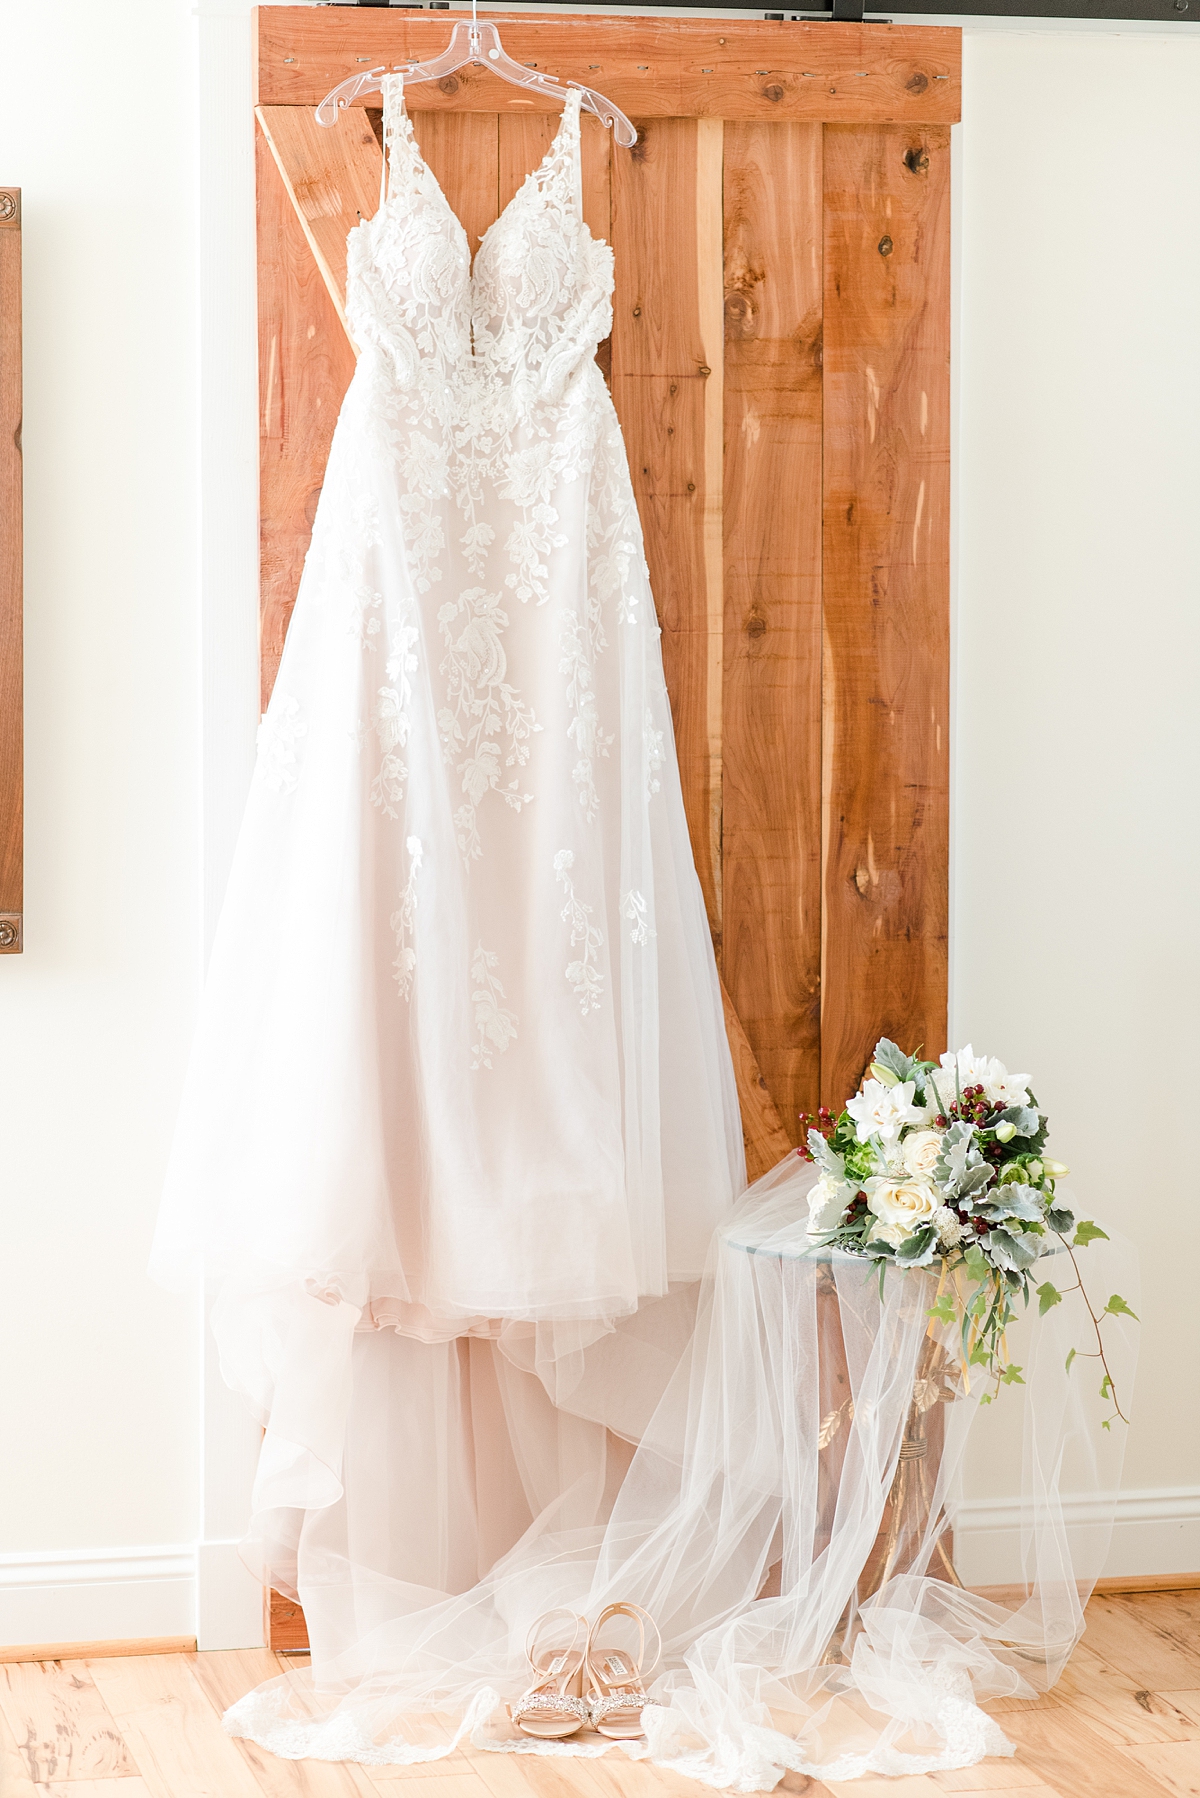 Rustic Chic Bridal Details at Fall Burlington Wedding. Richmond Wedding Photographer Kailey Brianne Photography.